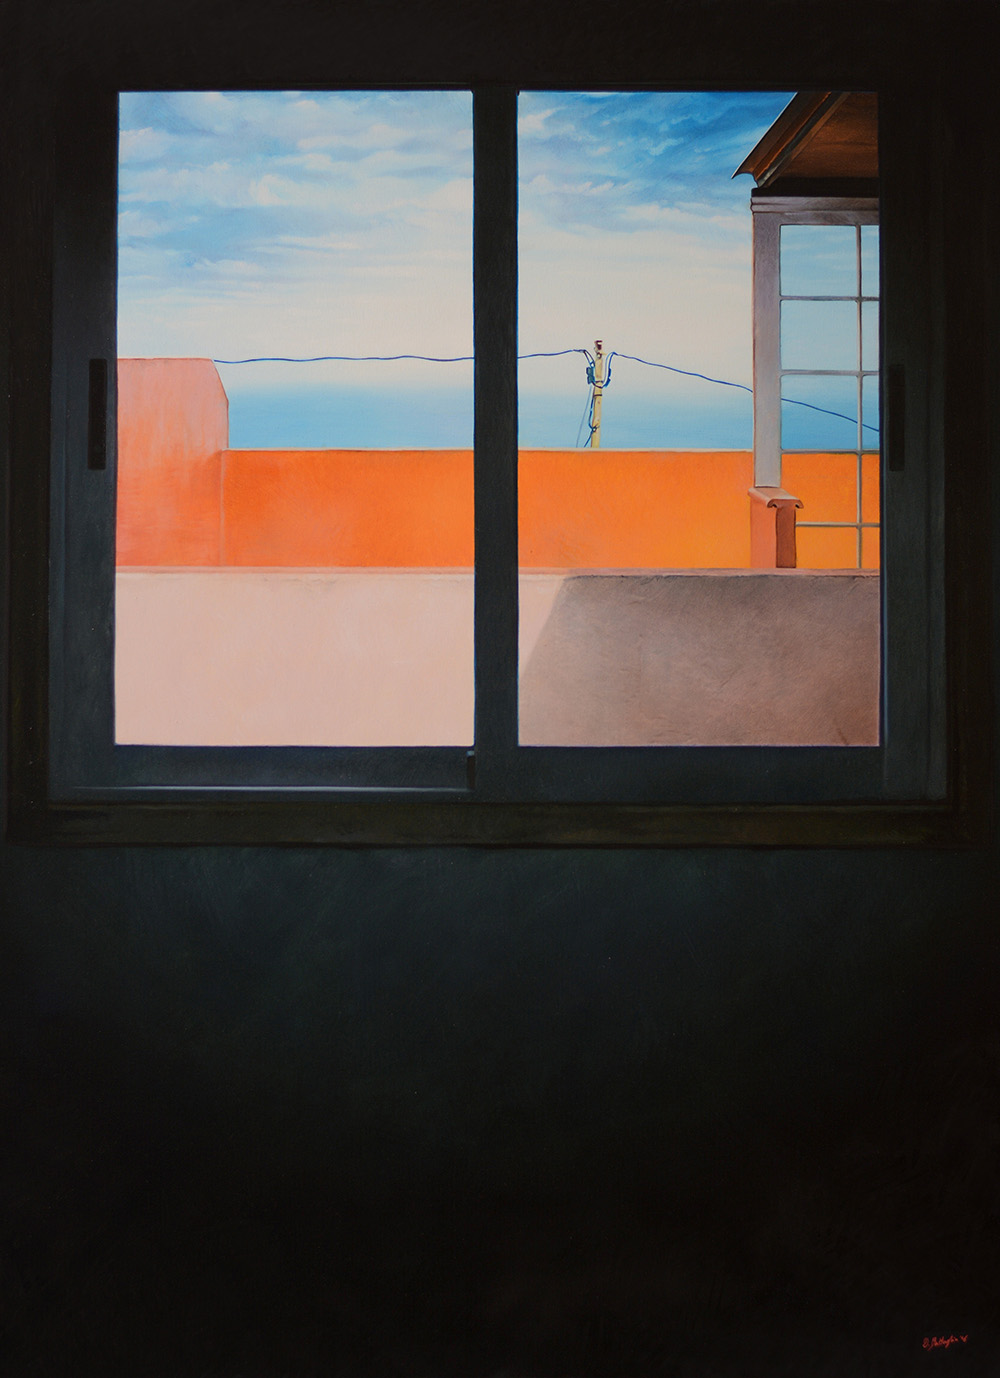 
'Waiting for the Summer'
(2016)
óleo sobre lienzo,
120x73 cm
